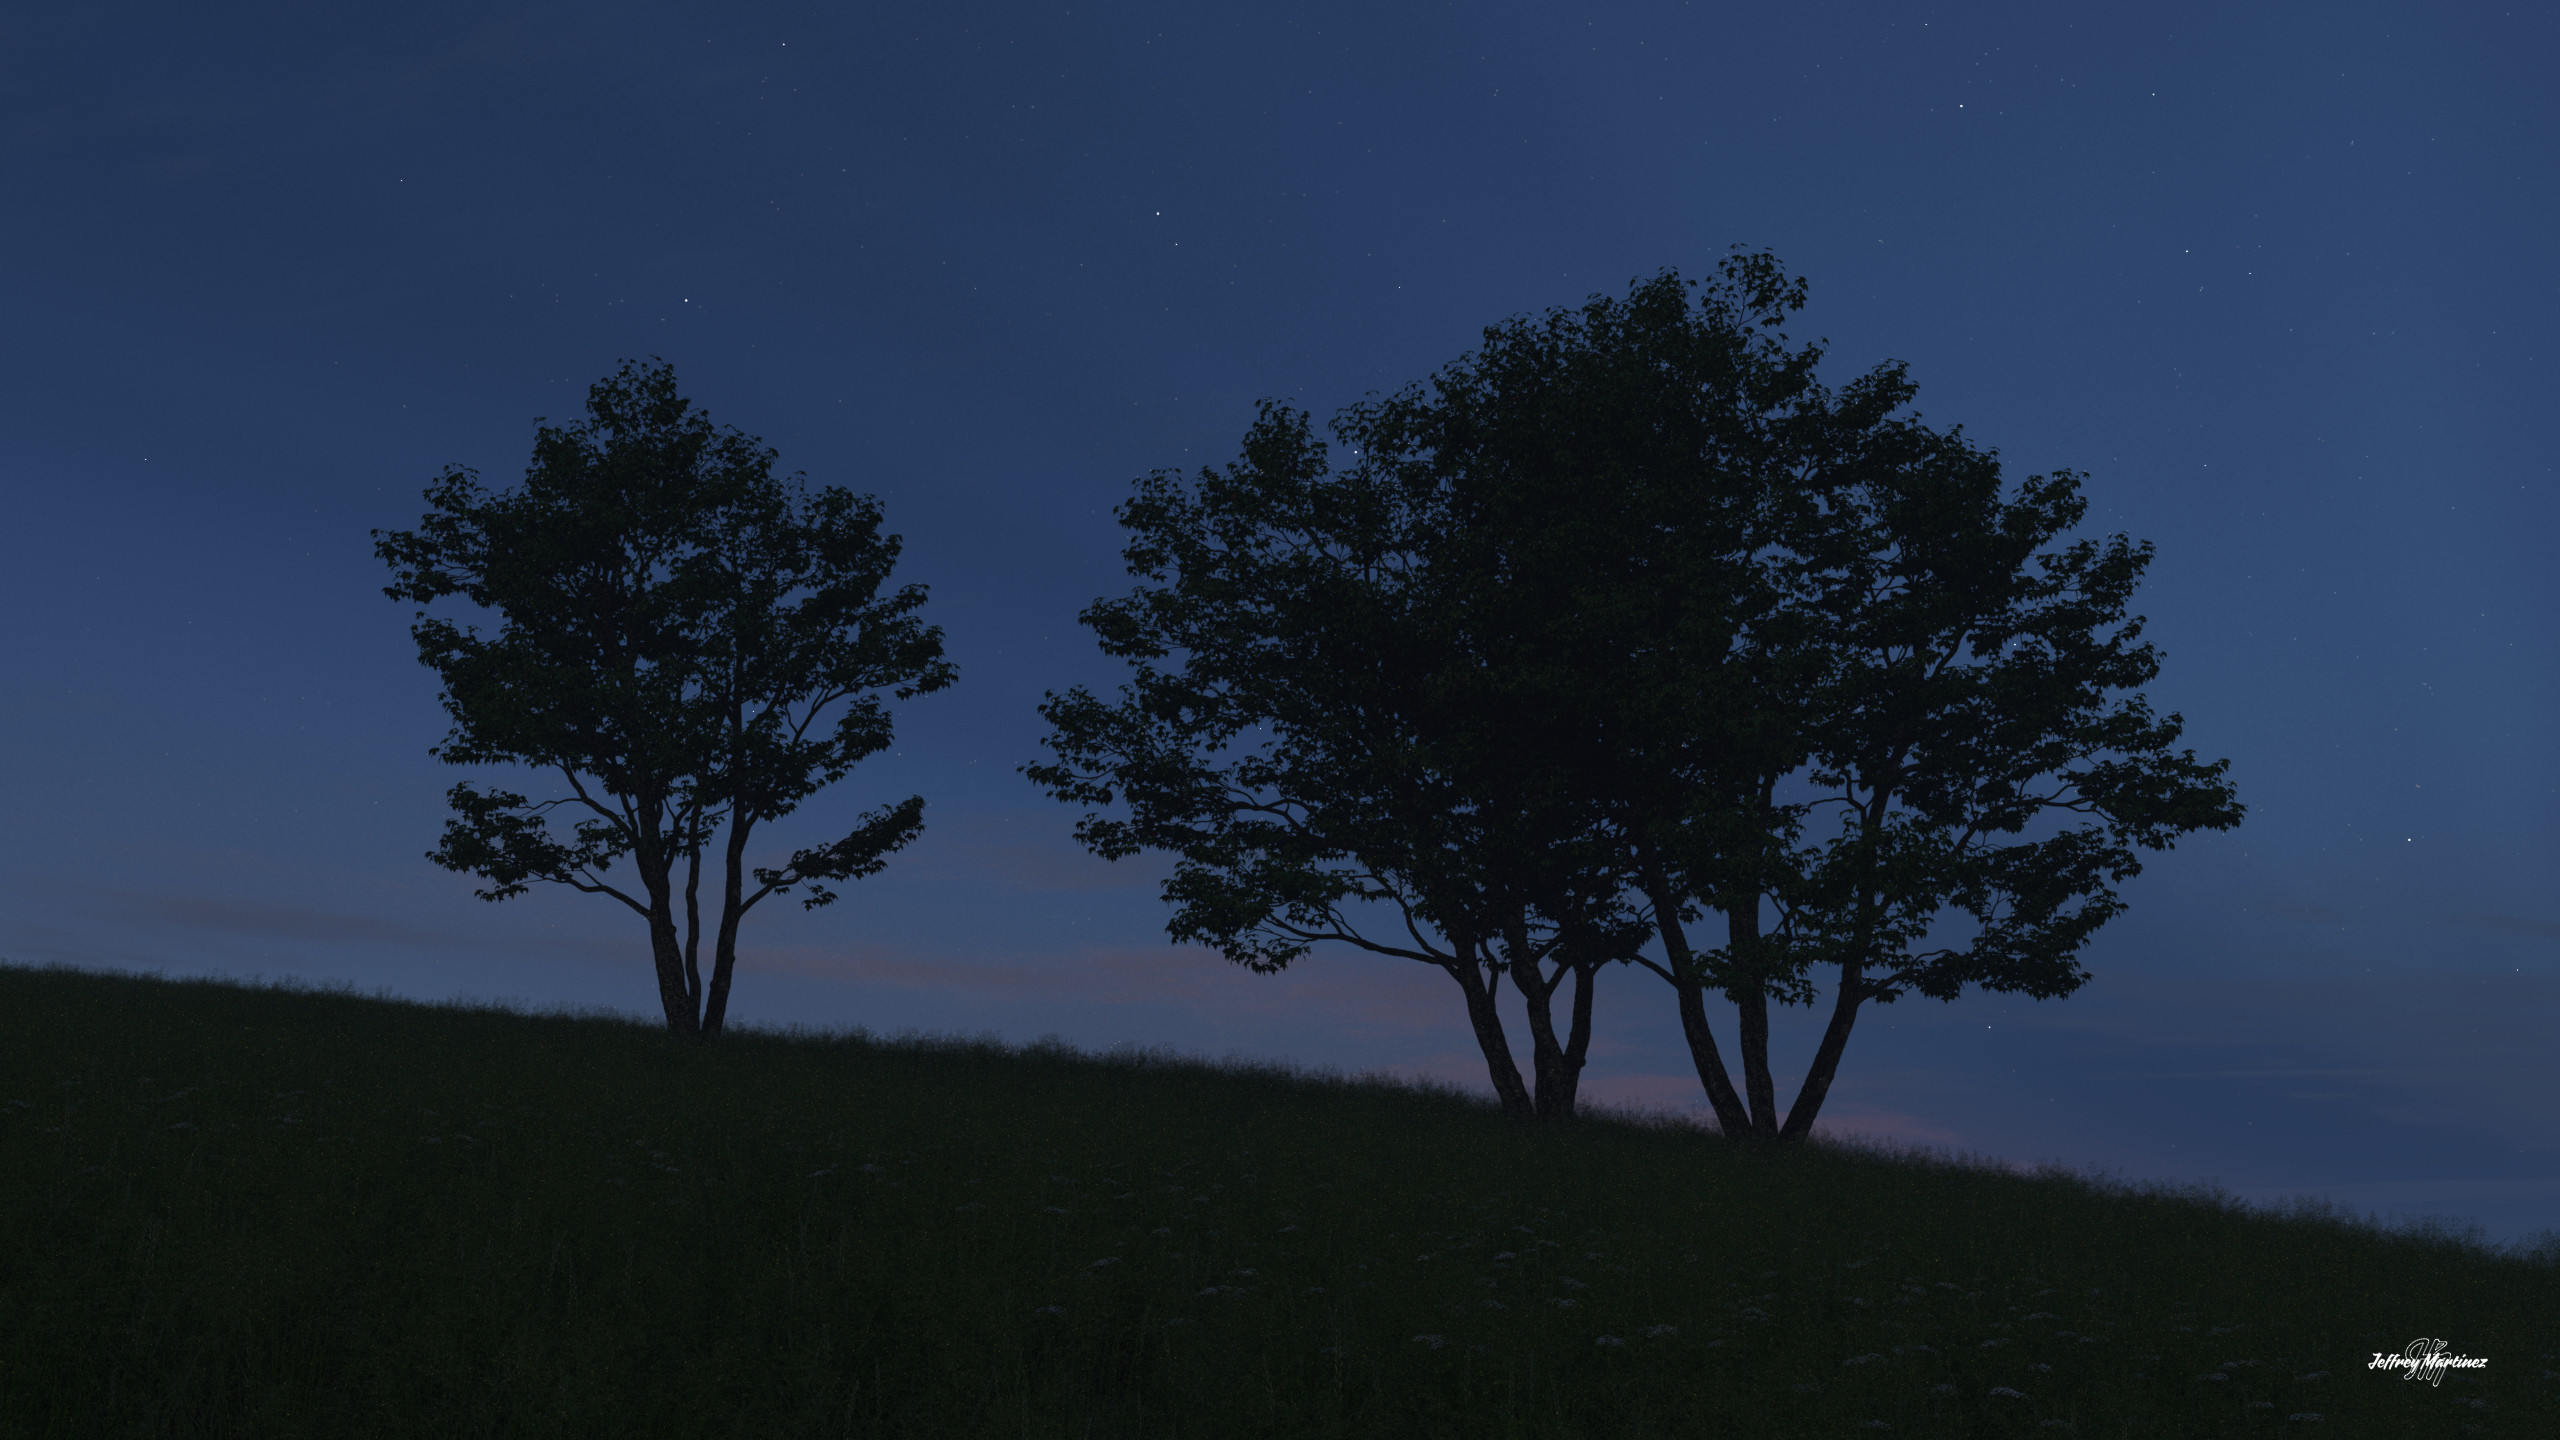 Trees on a Hill - Dawn
20220622TG